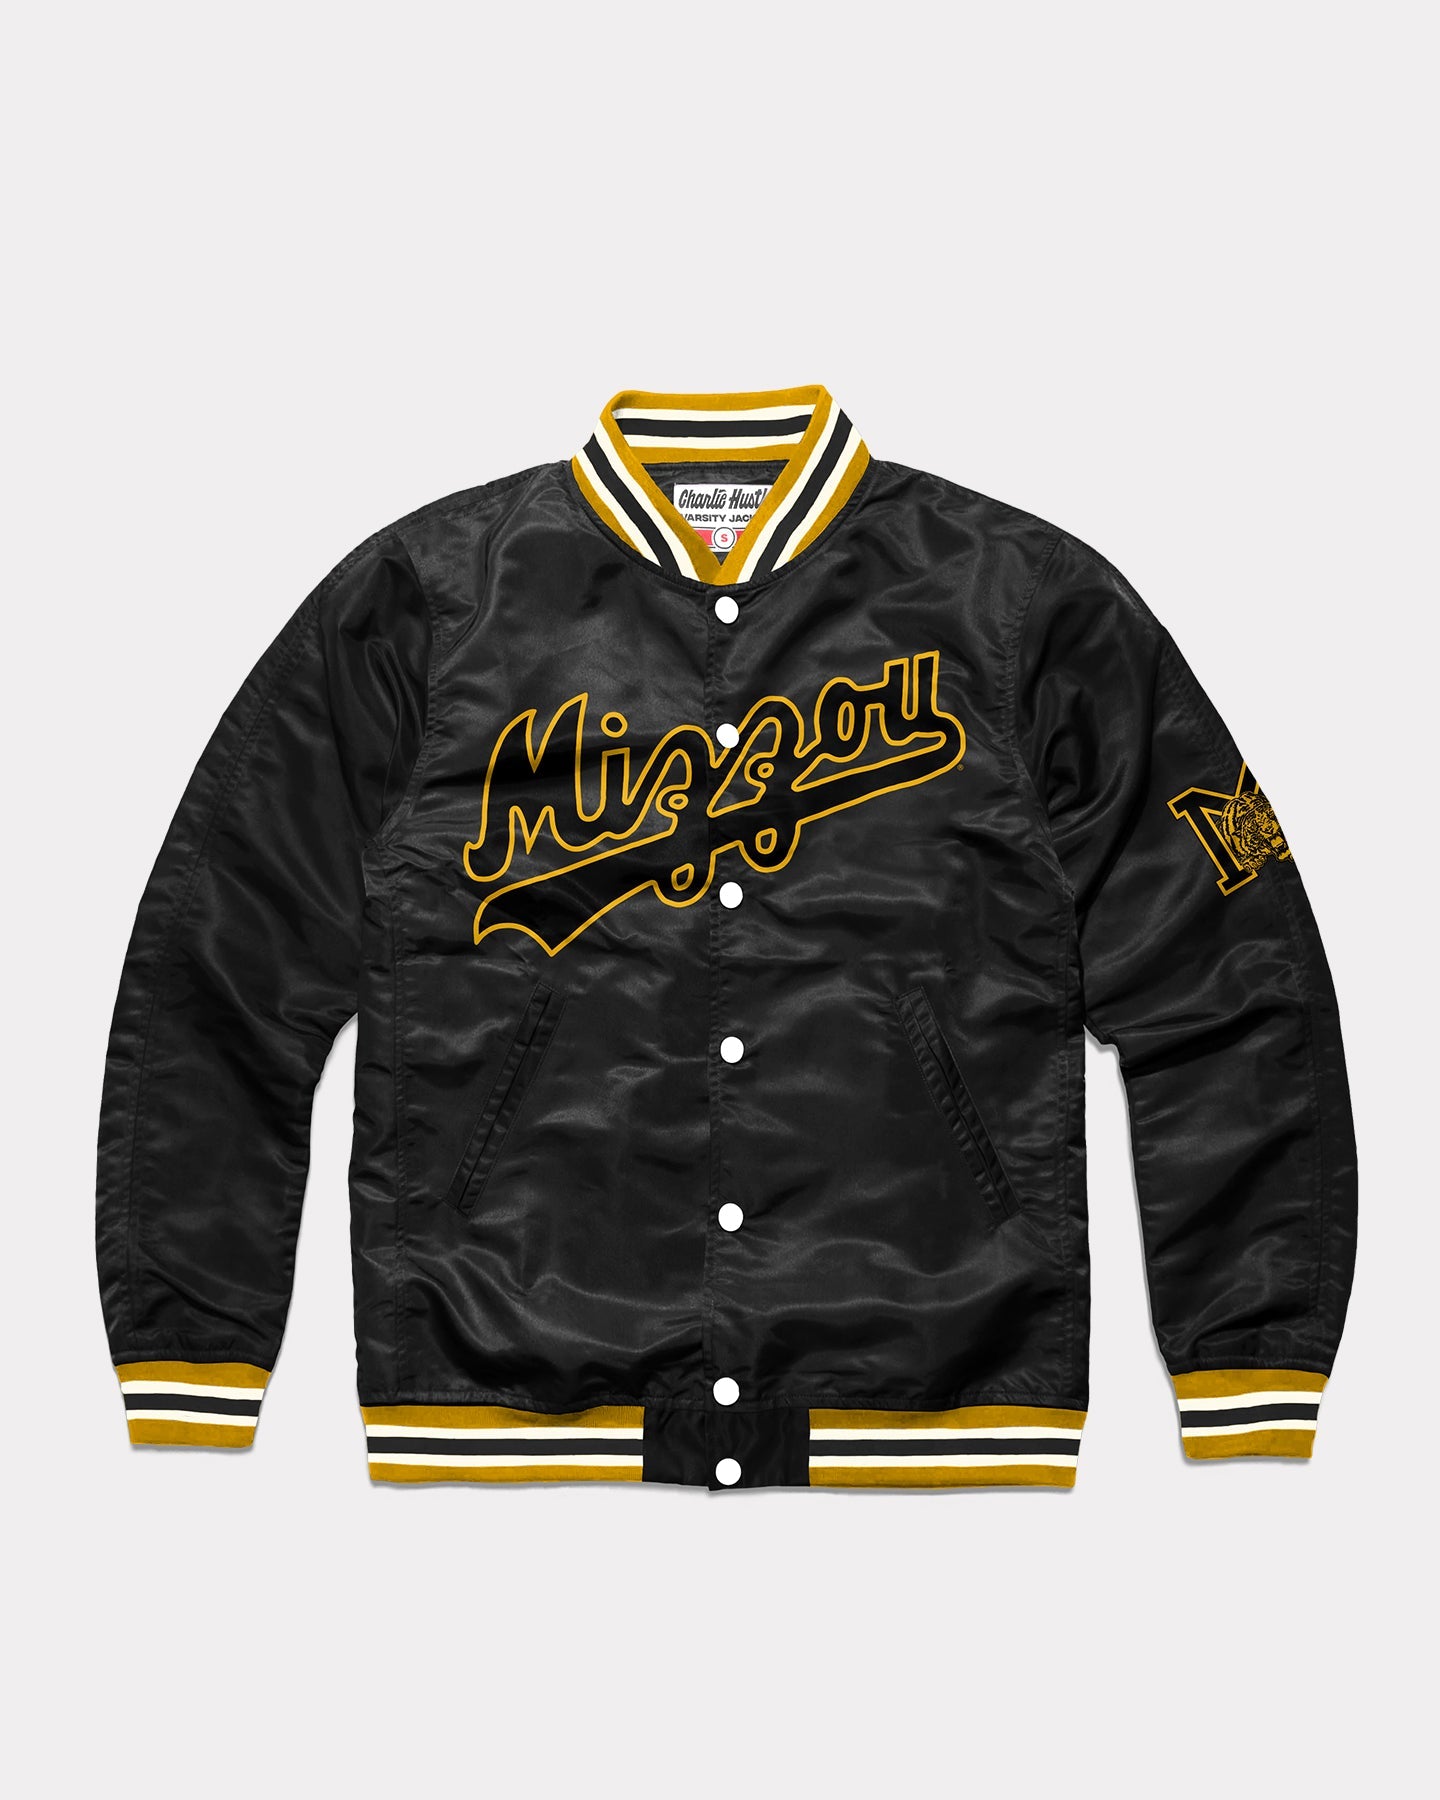 University of Iowa Vintage Black Varsity Jacket